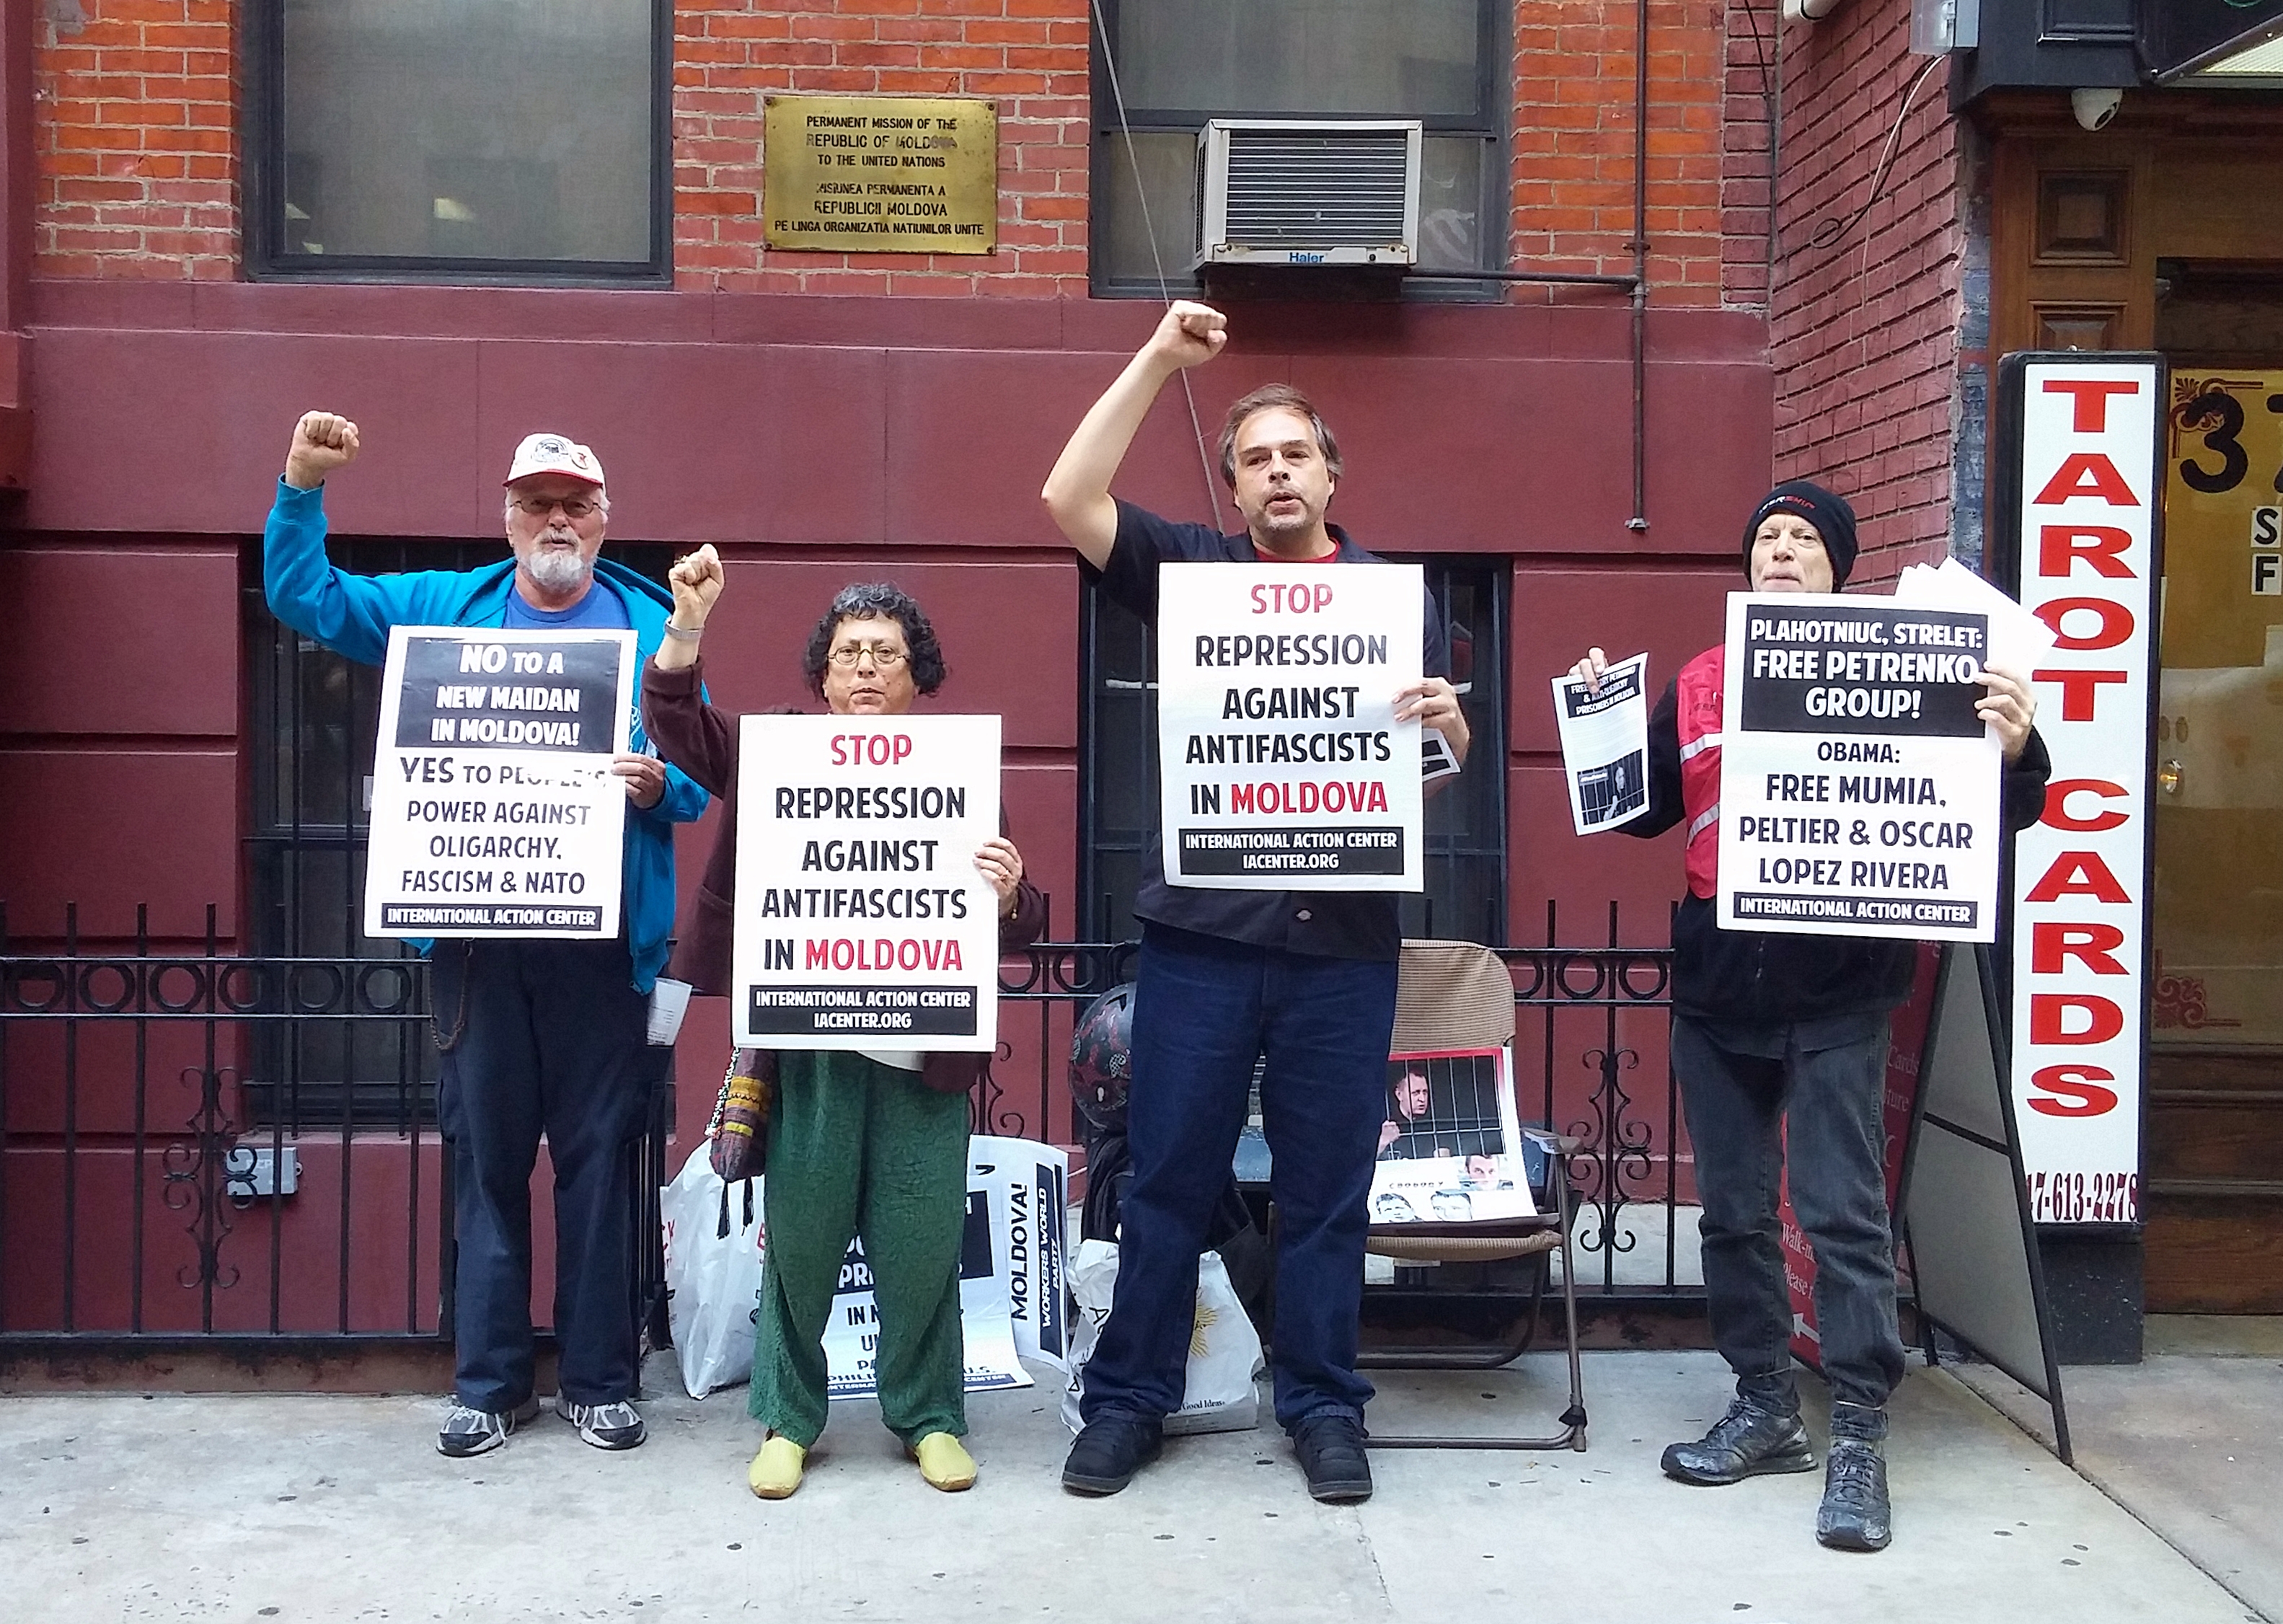 New York picket says: Free Petrenko & Moldovan protesters